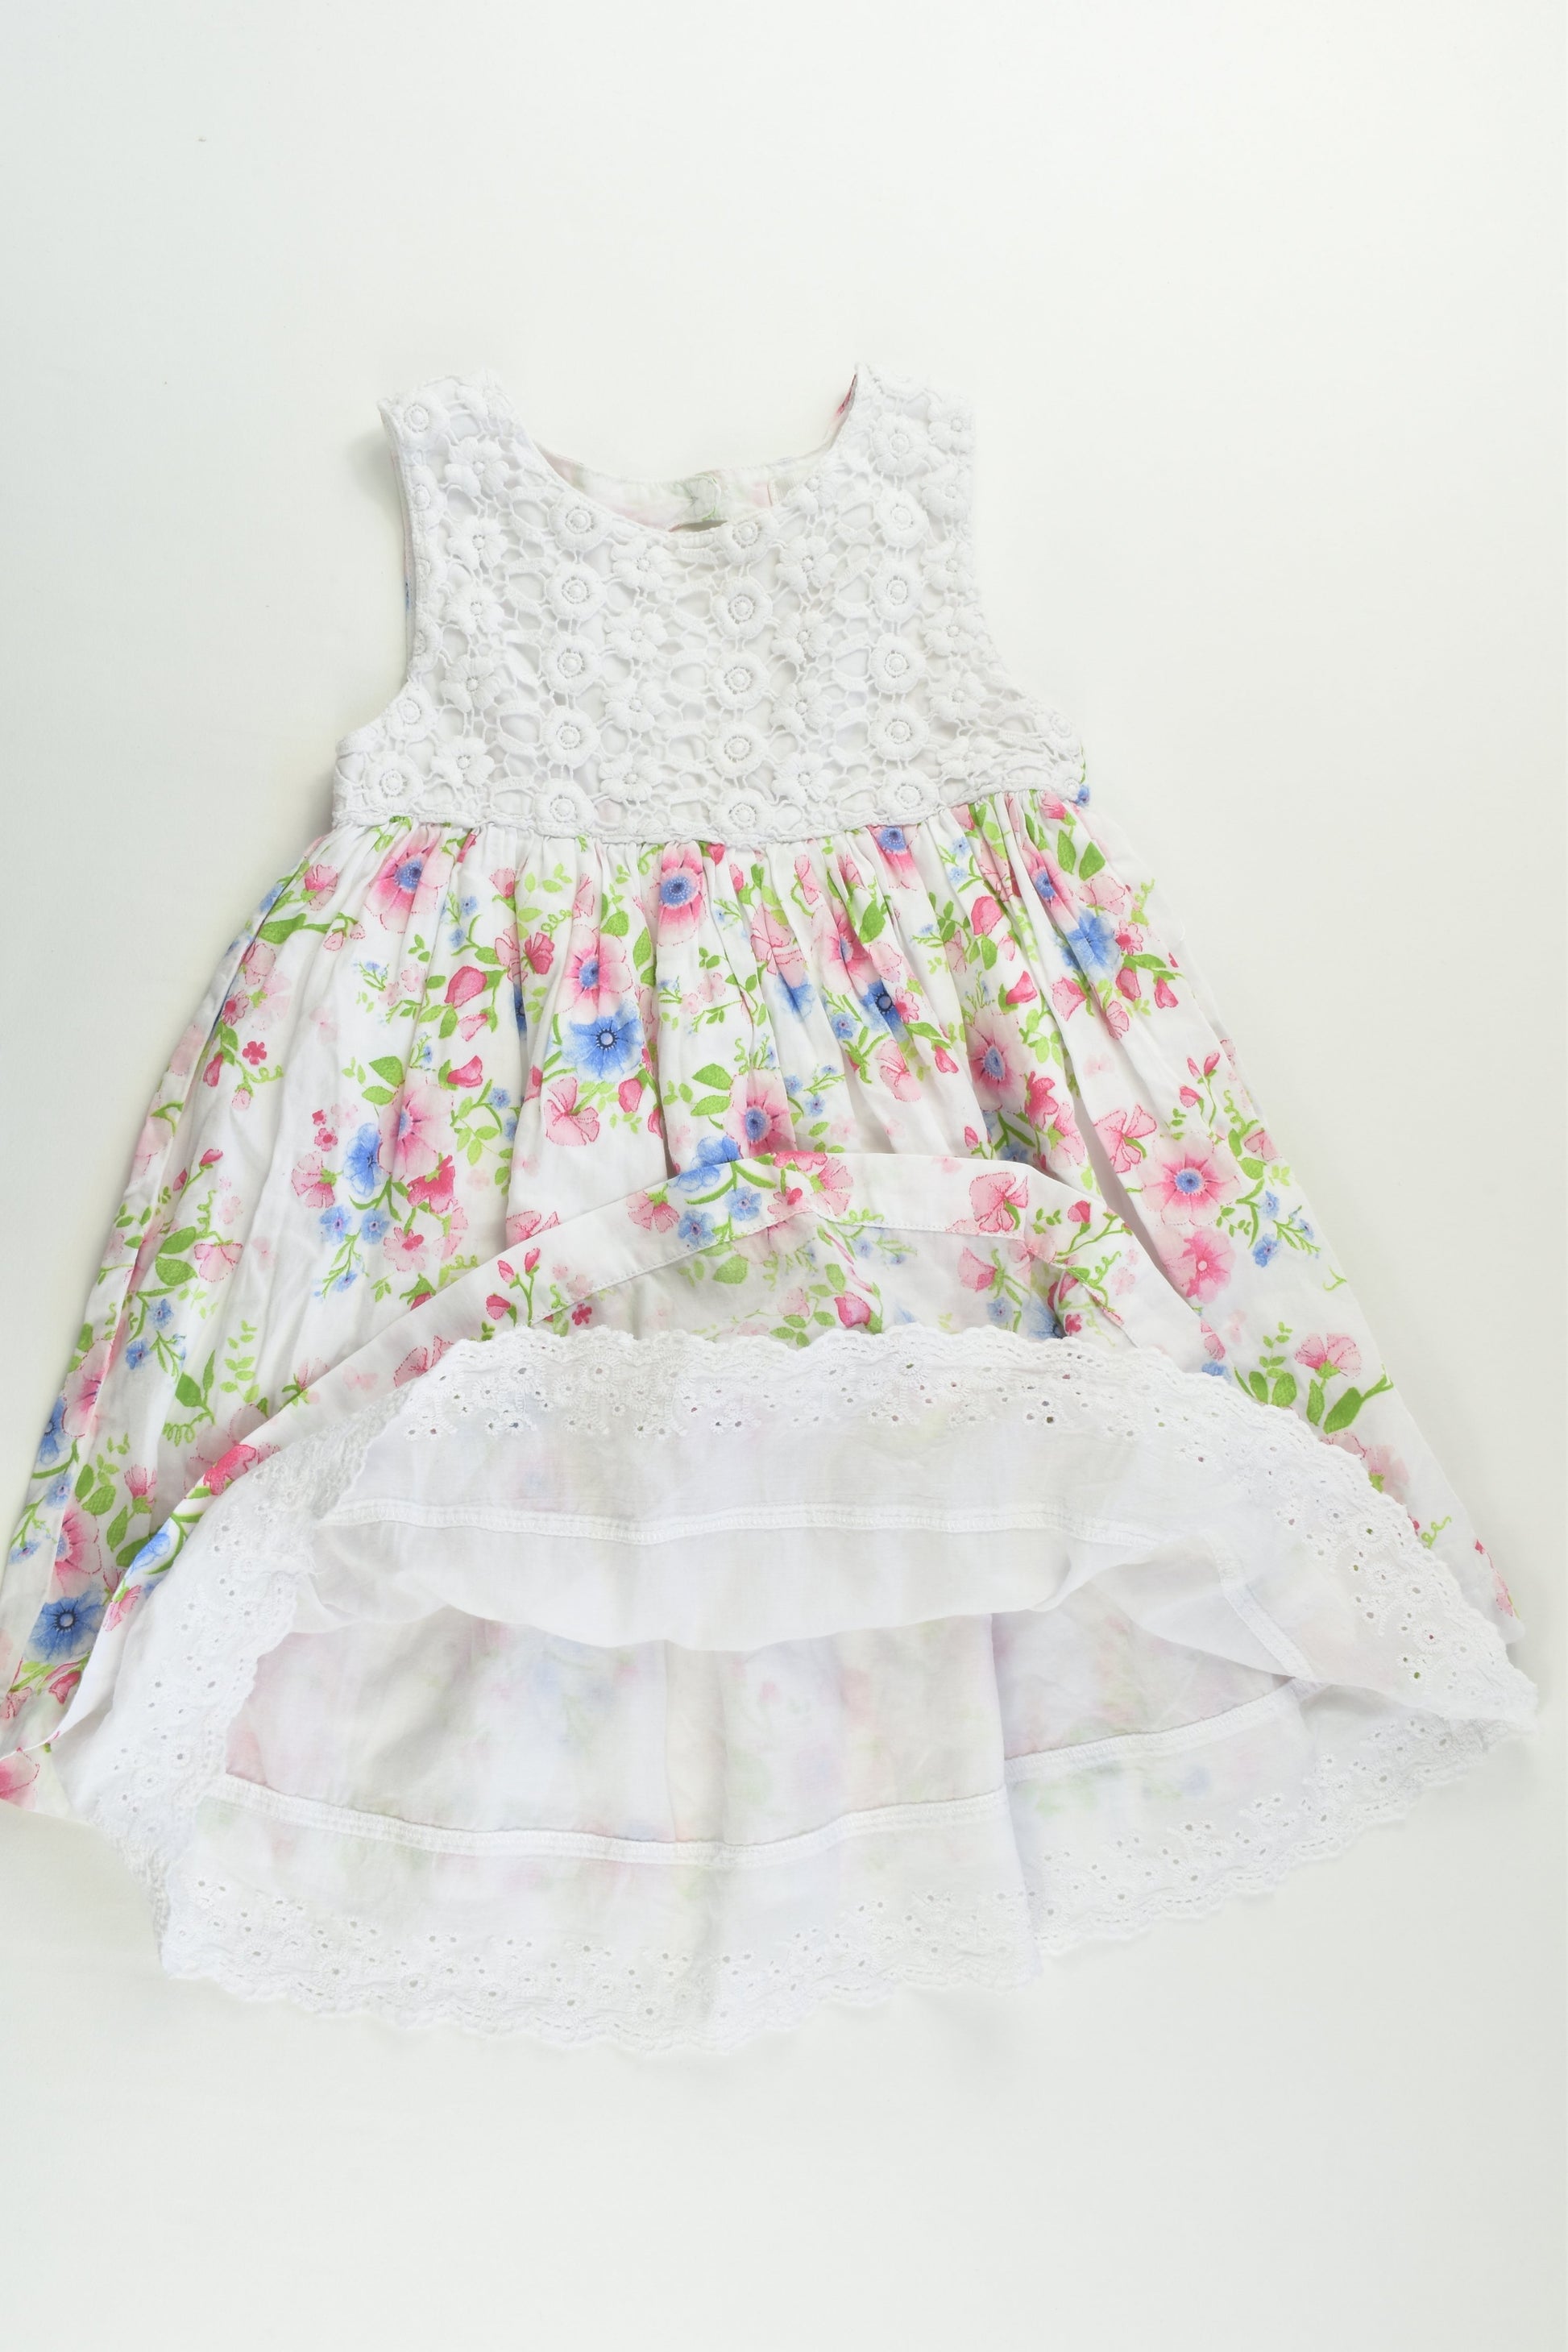 Pumpkin Patch Size 1 (12-18 months) Lined Floral Dress with Lace Details